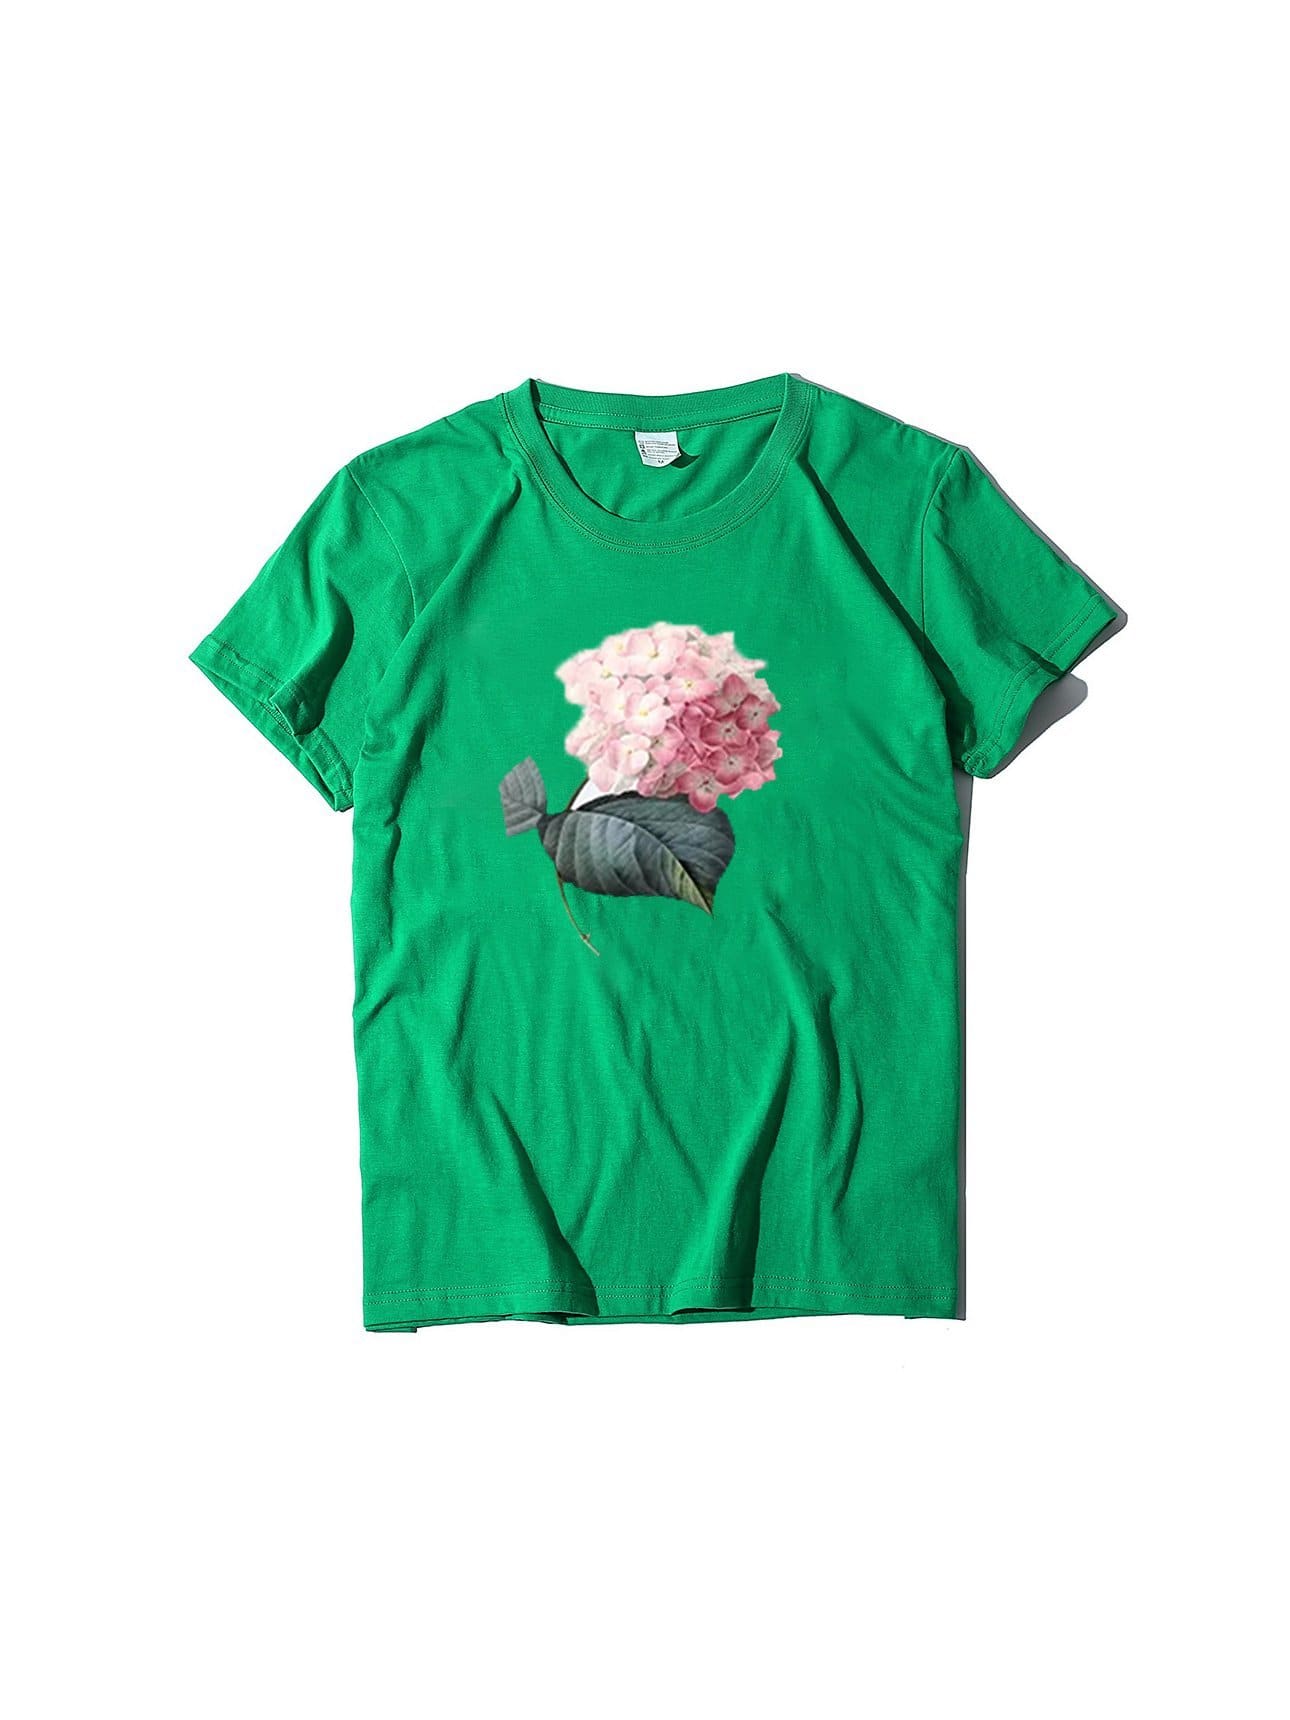 lovevop Crew Neck Printed Loose Summer T-Shirt Women